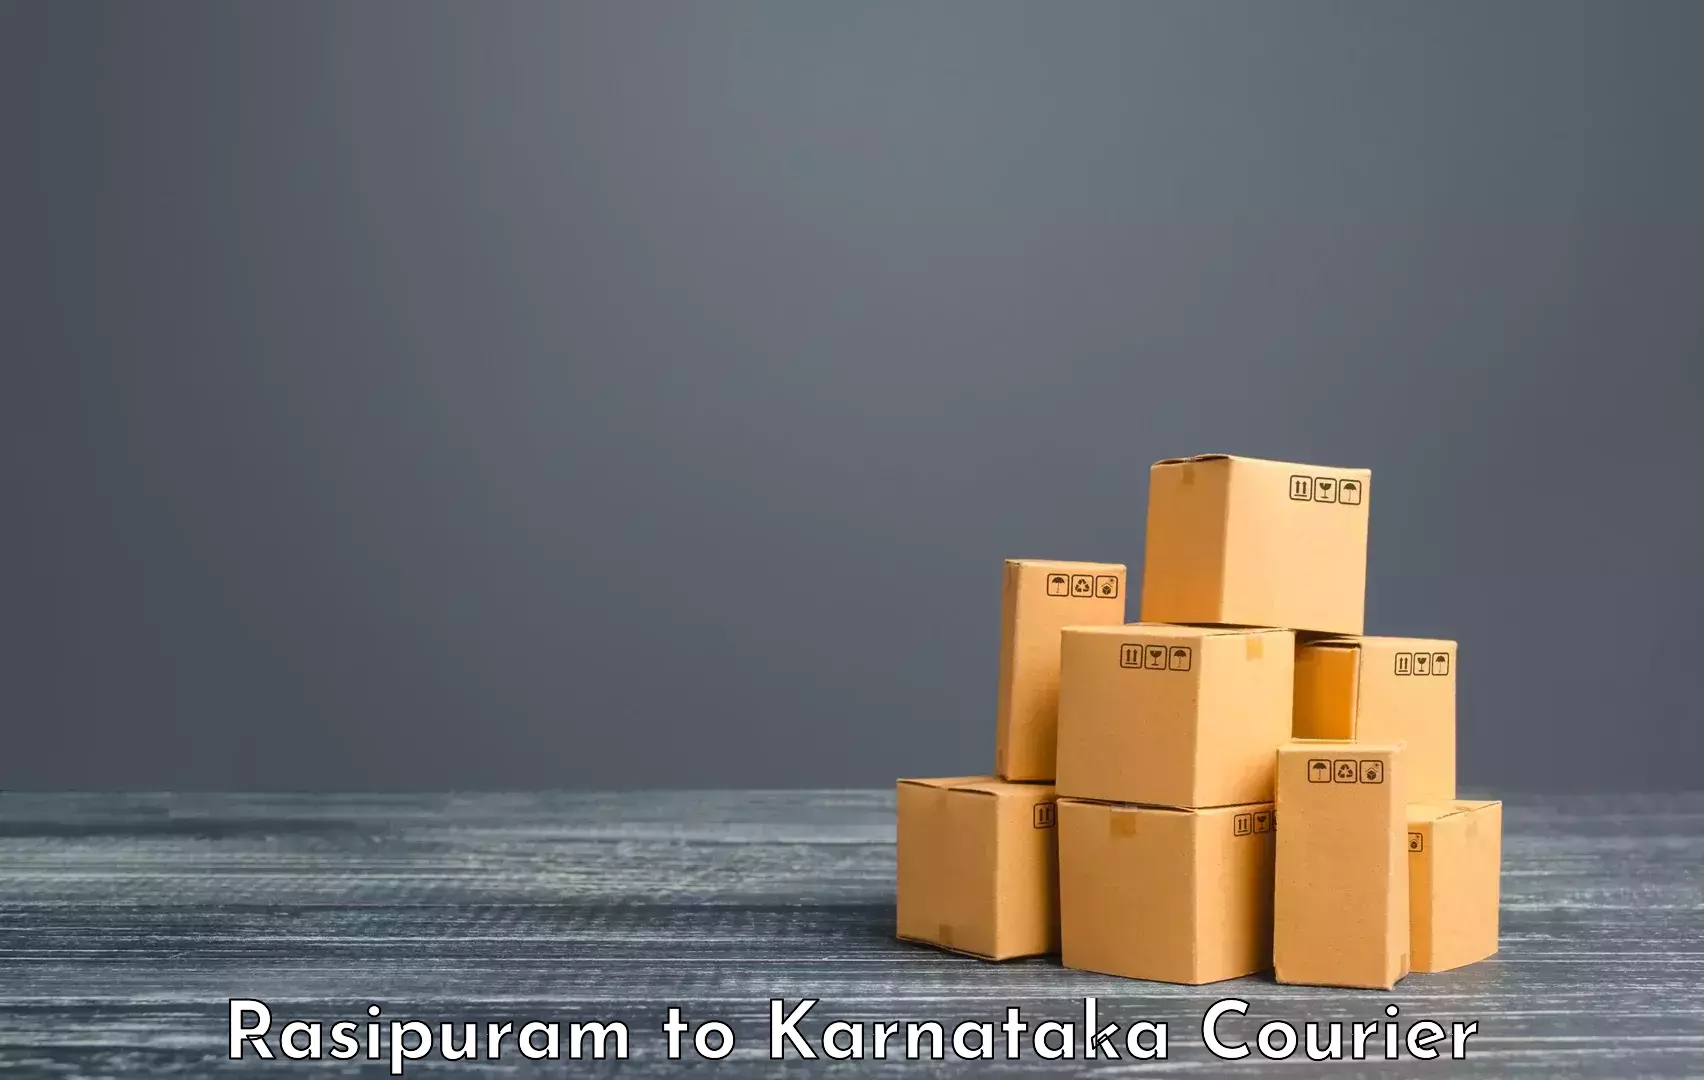 Luggage delivery network Rasipuram to Karnataka